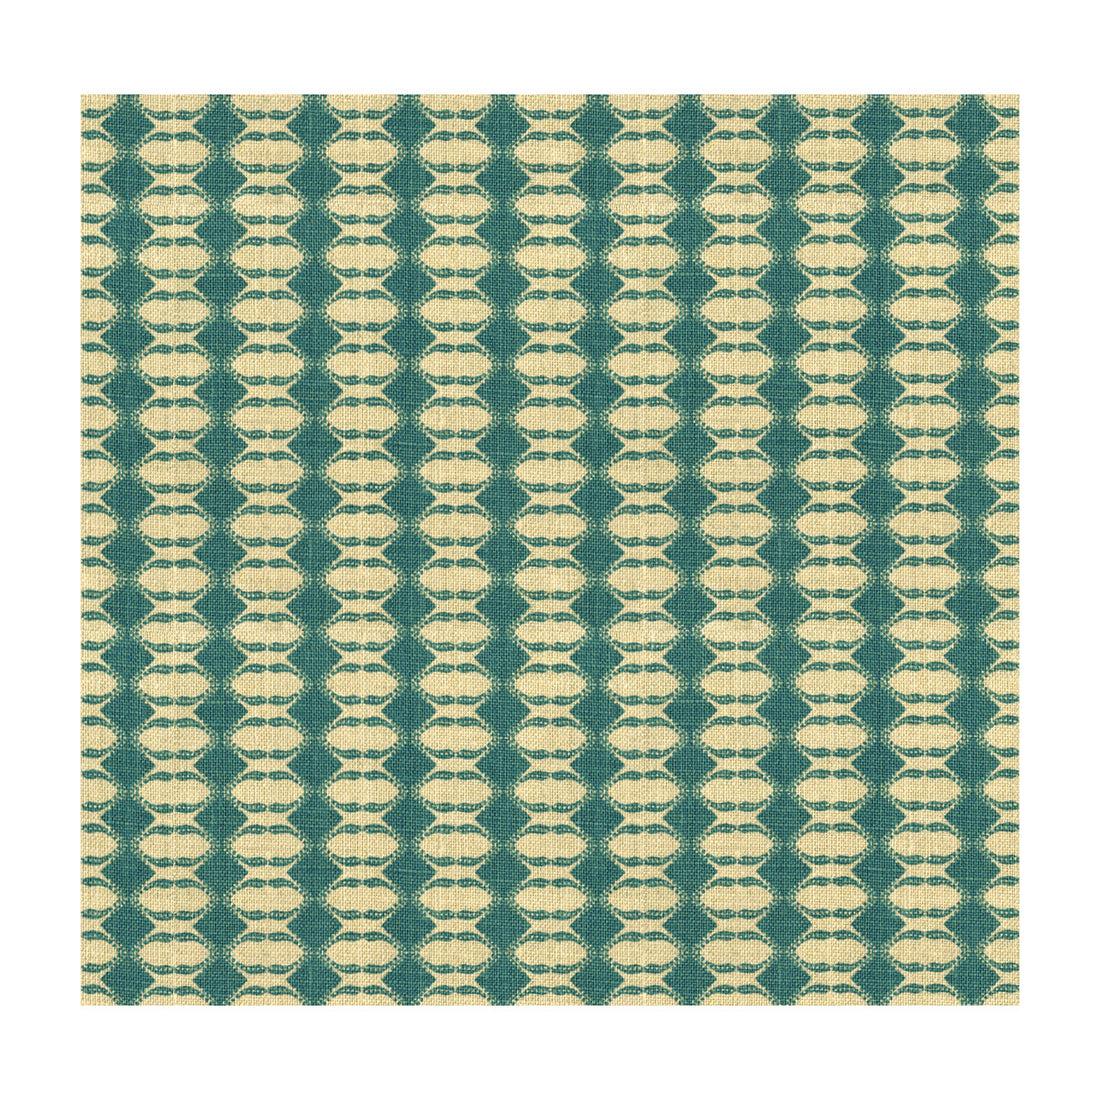 Diamond fabric in cornflower color - pattern GWF-3507.5.0 - by Lee Jofa Modern in the Allegra Hicks Garden collection